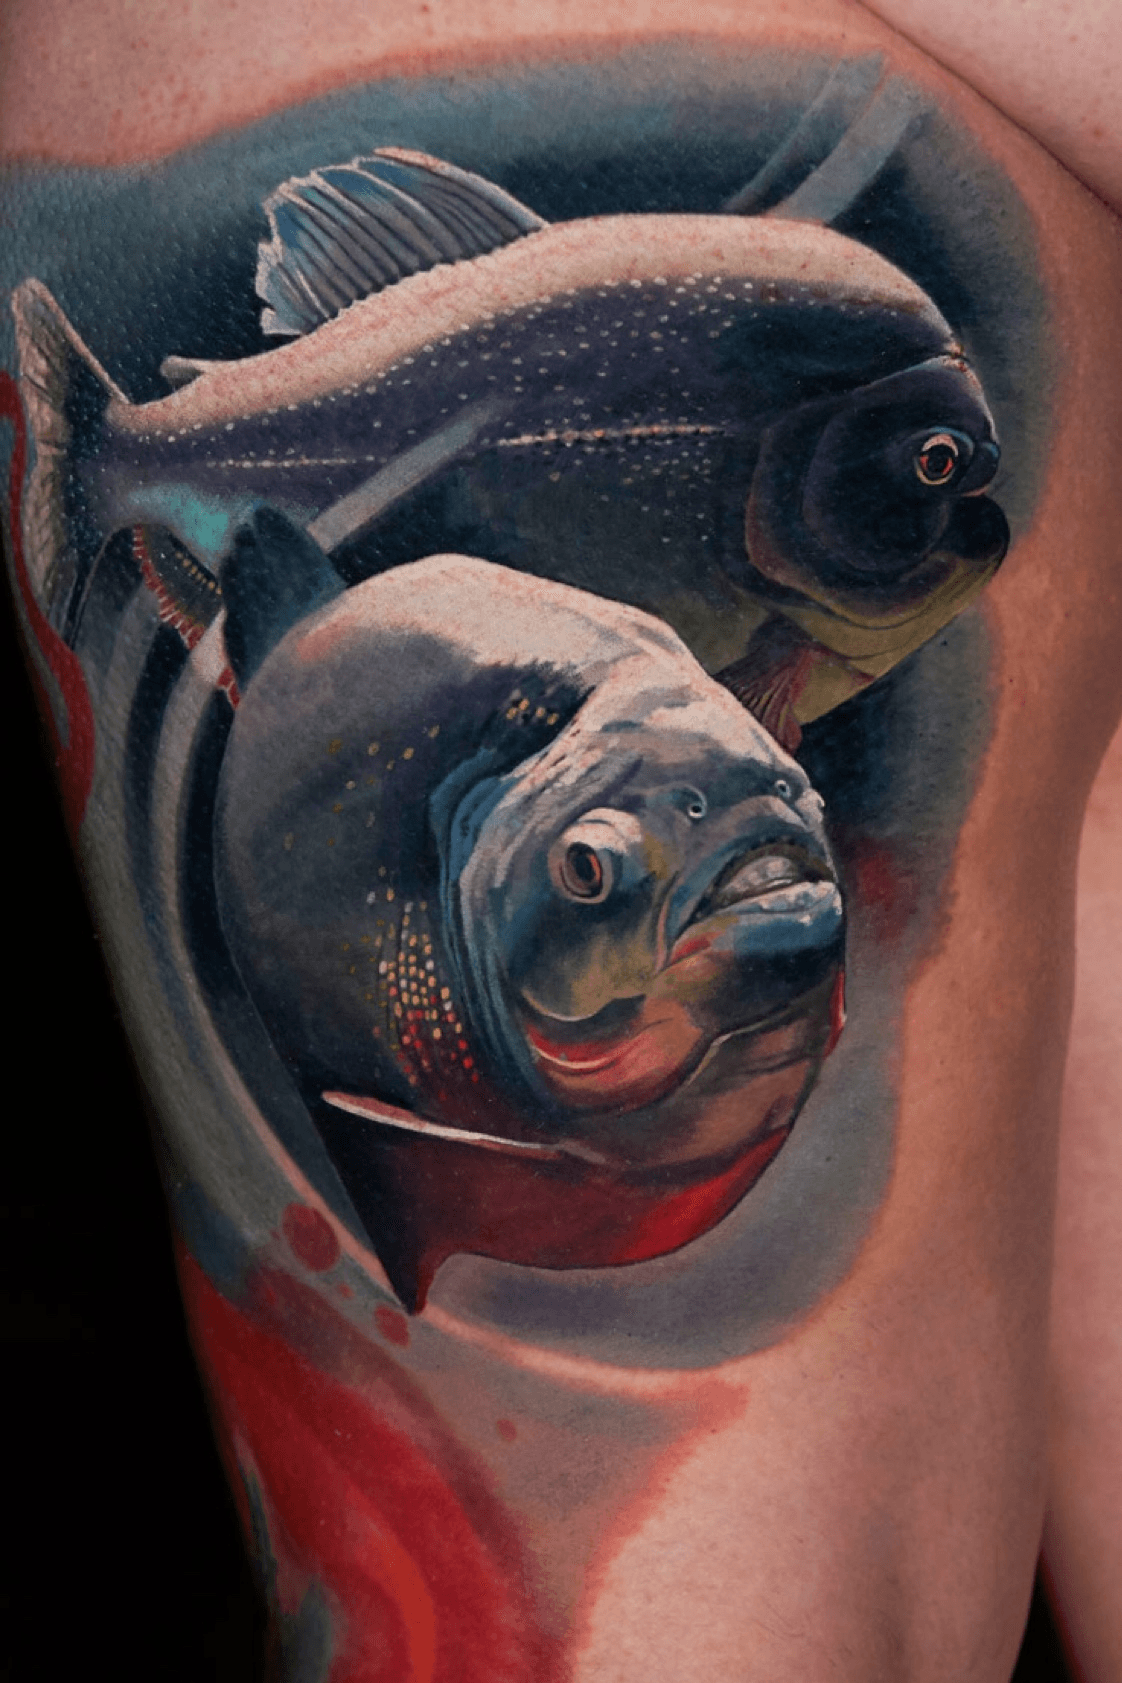 Cover-Ups - Piranha Tattoo